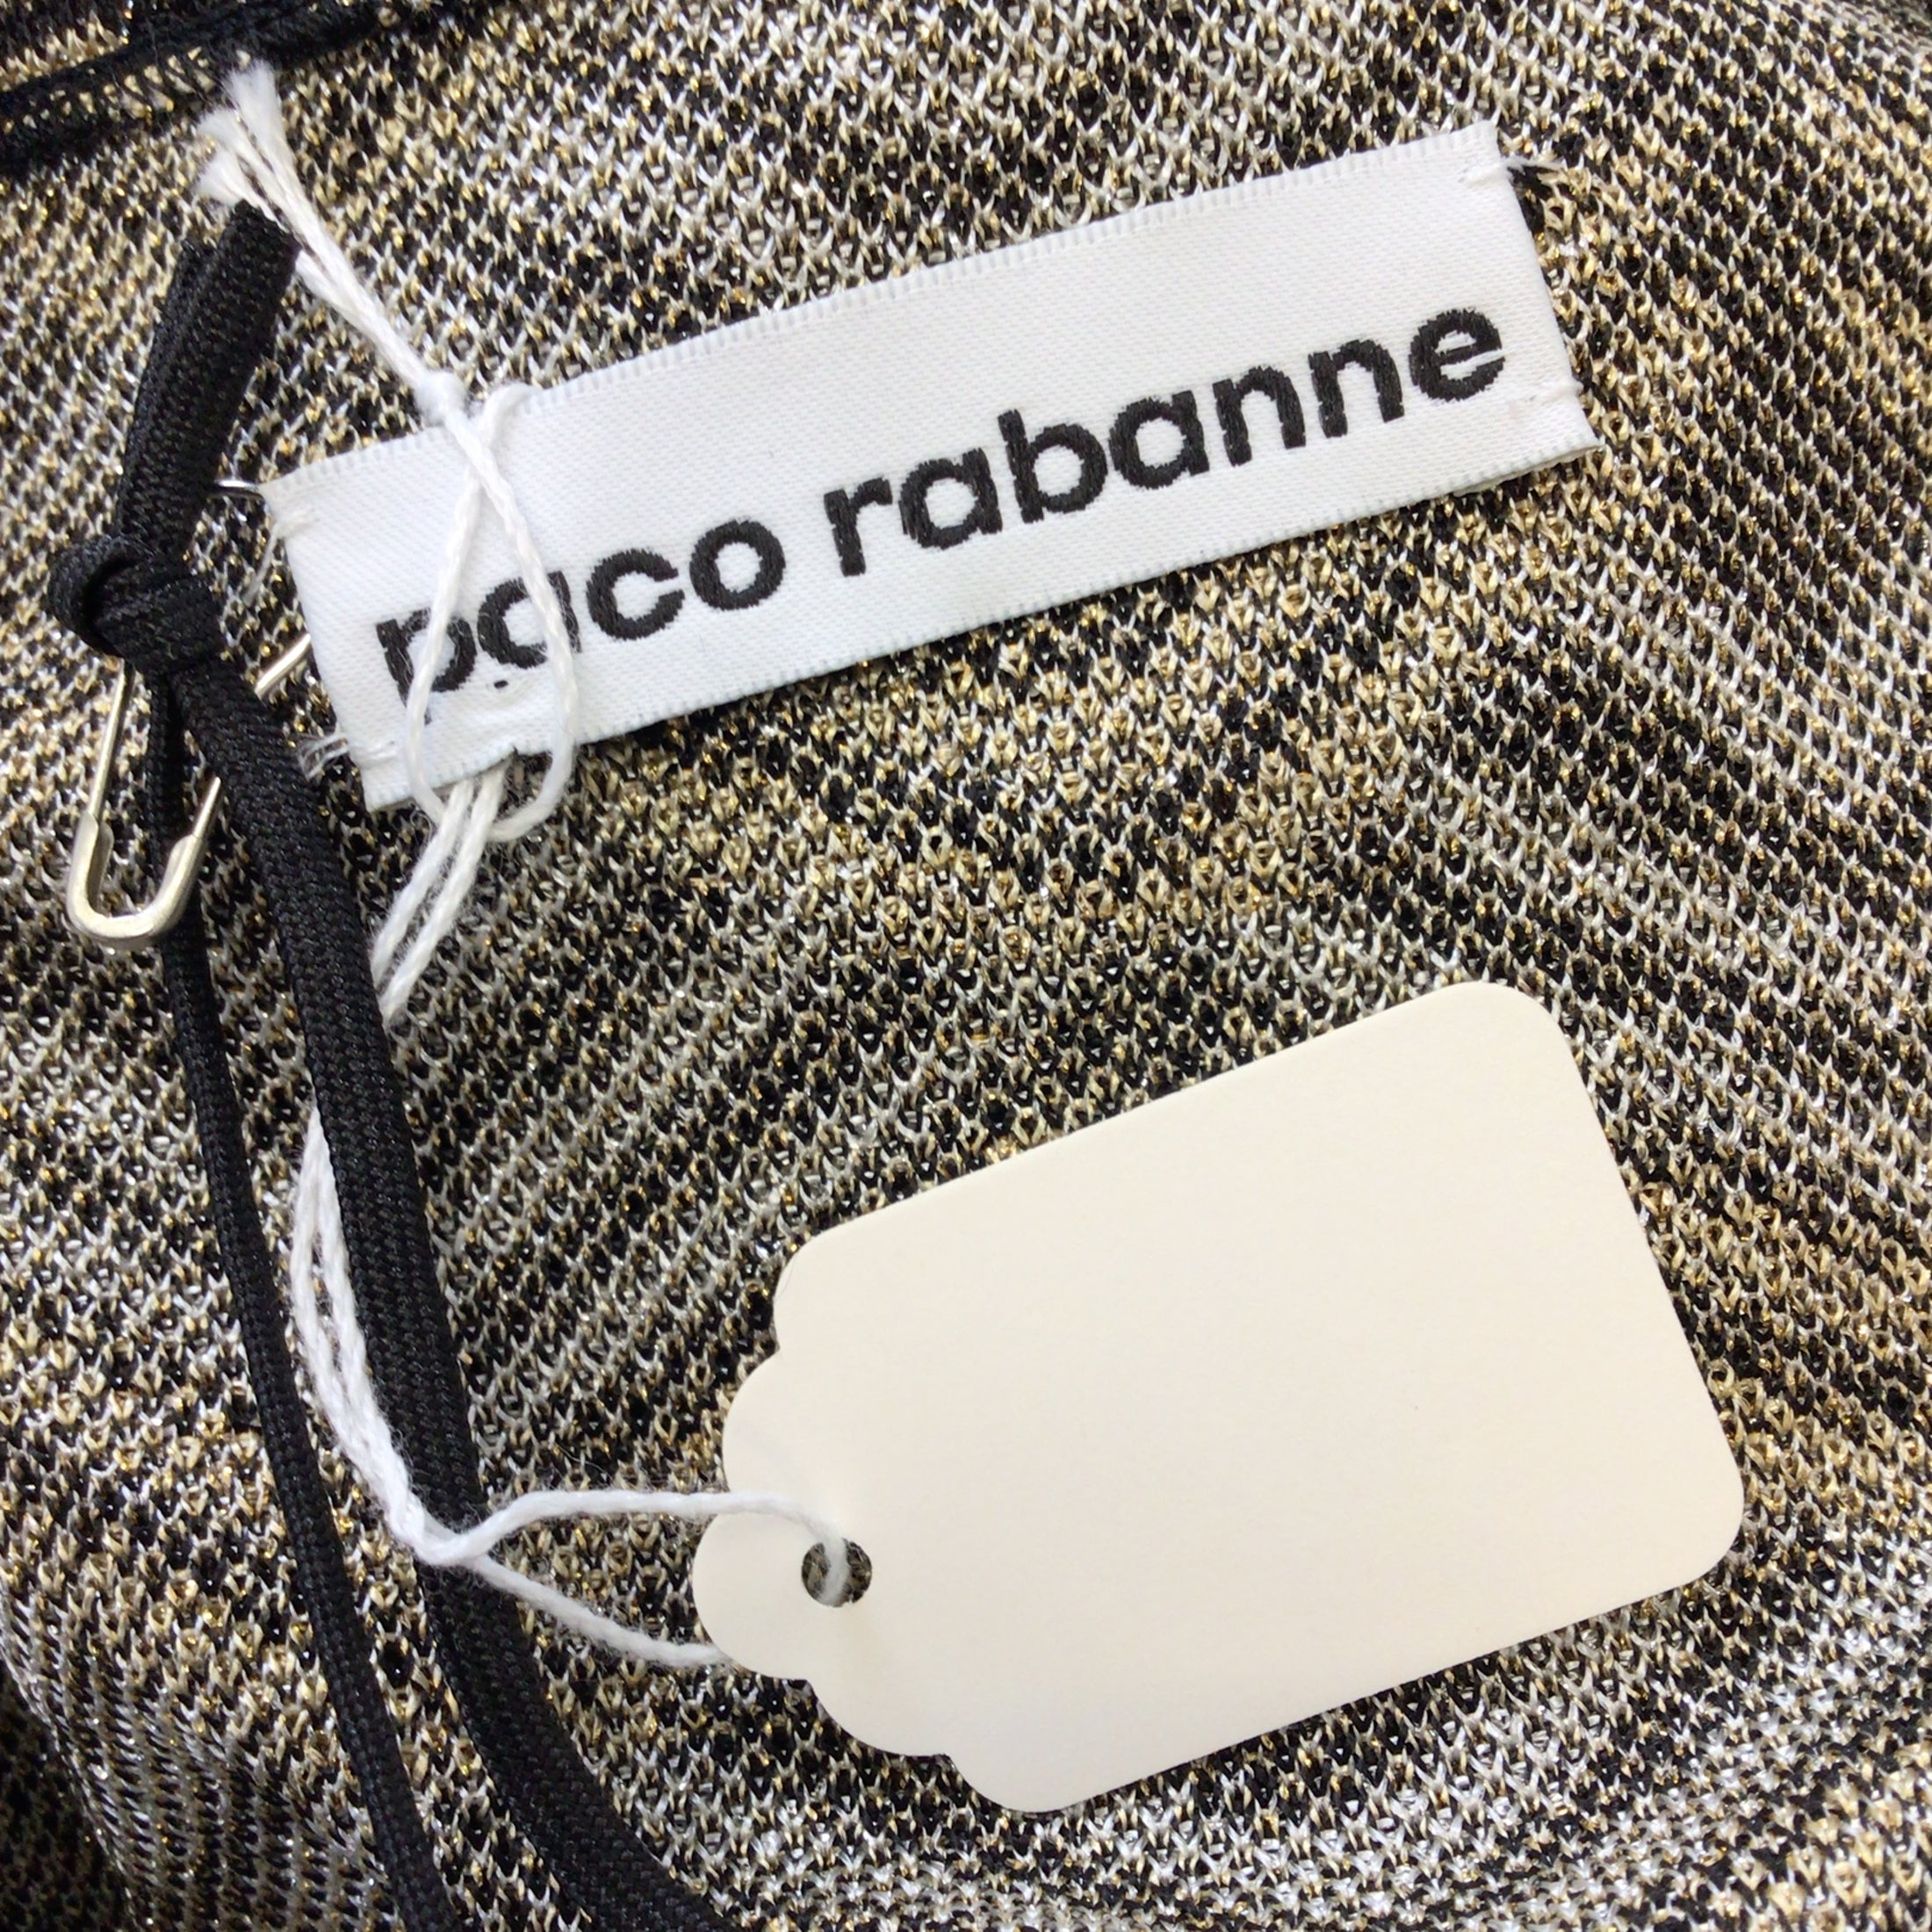 Paco Rabanne Gold / Black / Silver Metallic Geometric Patterned Knit Cardigan Sweater